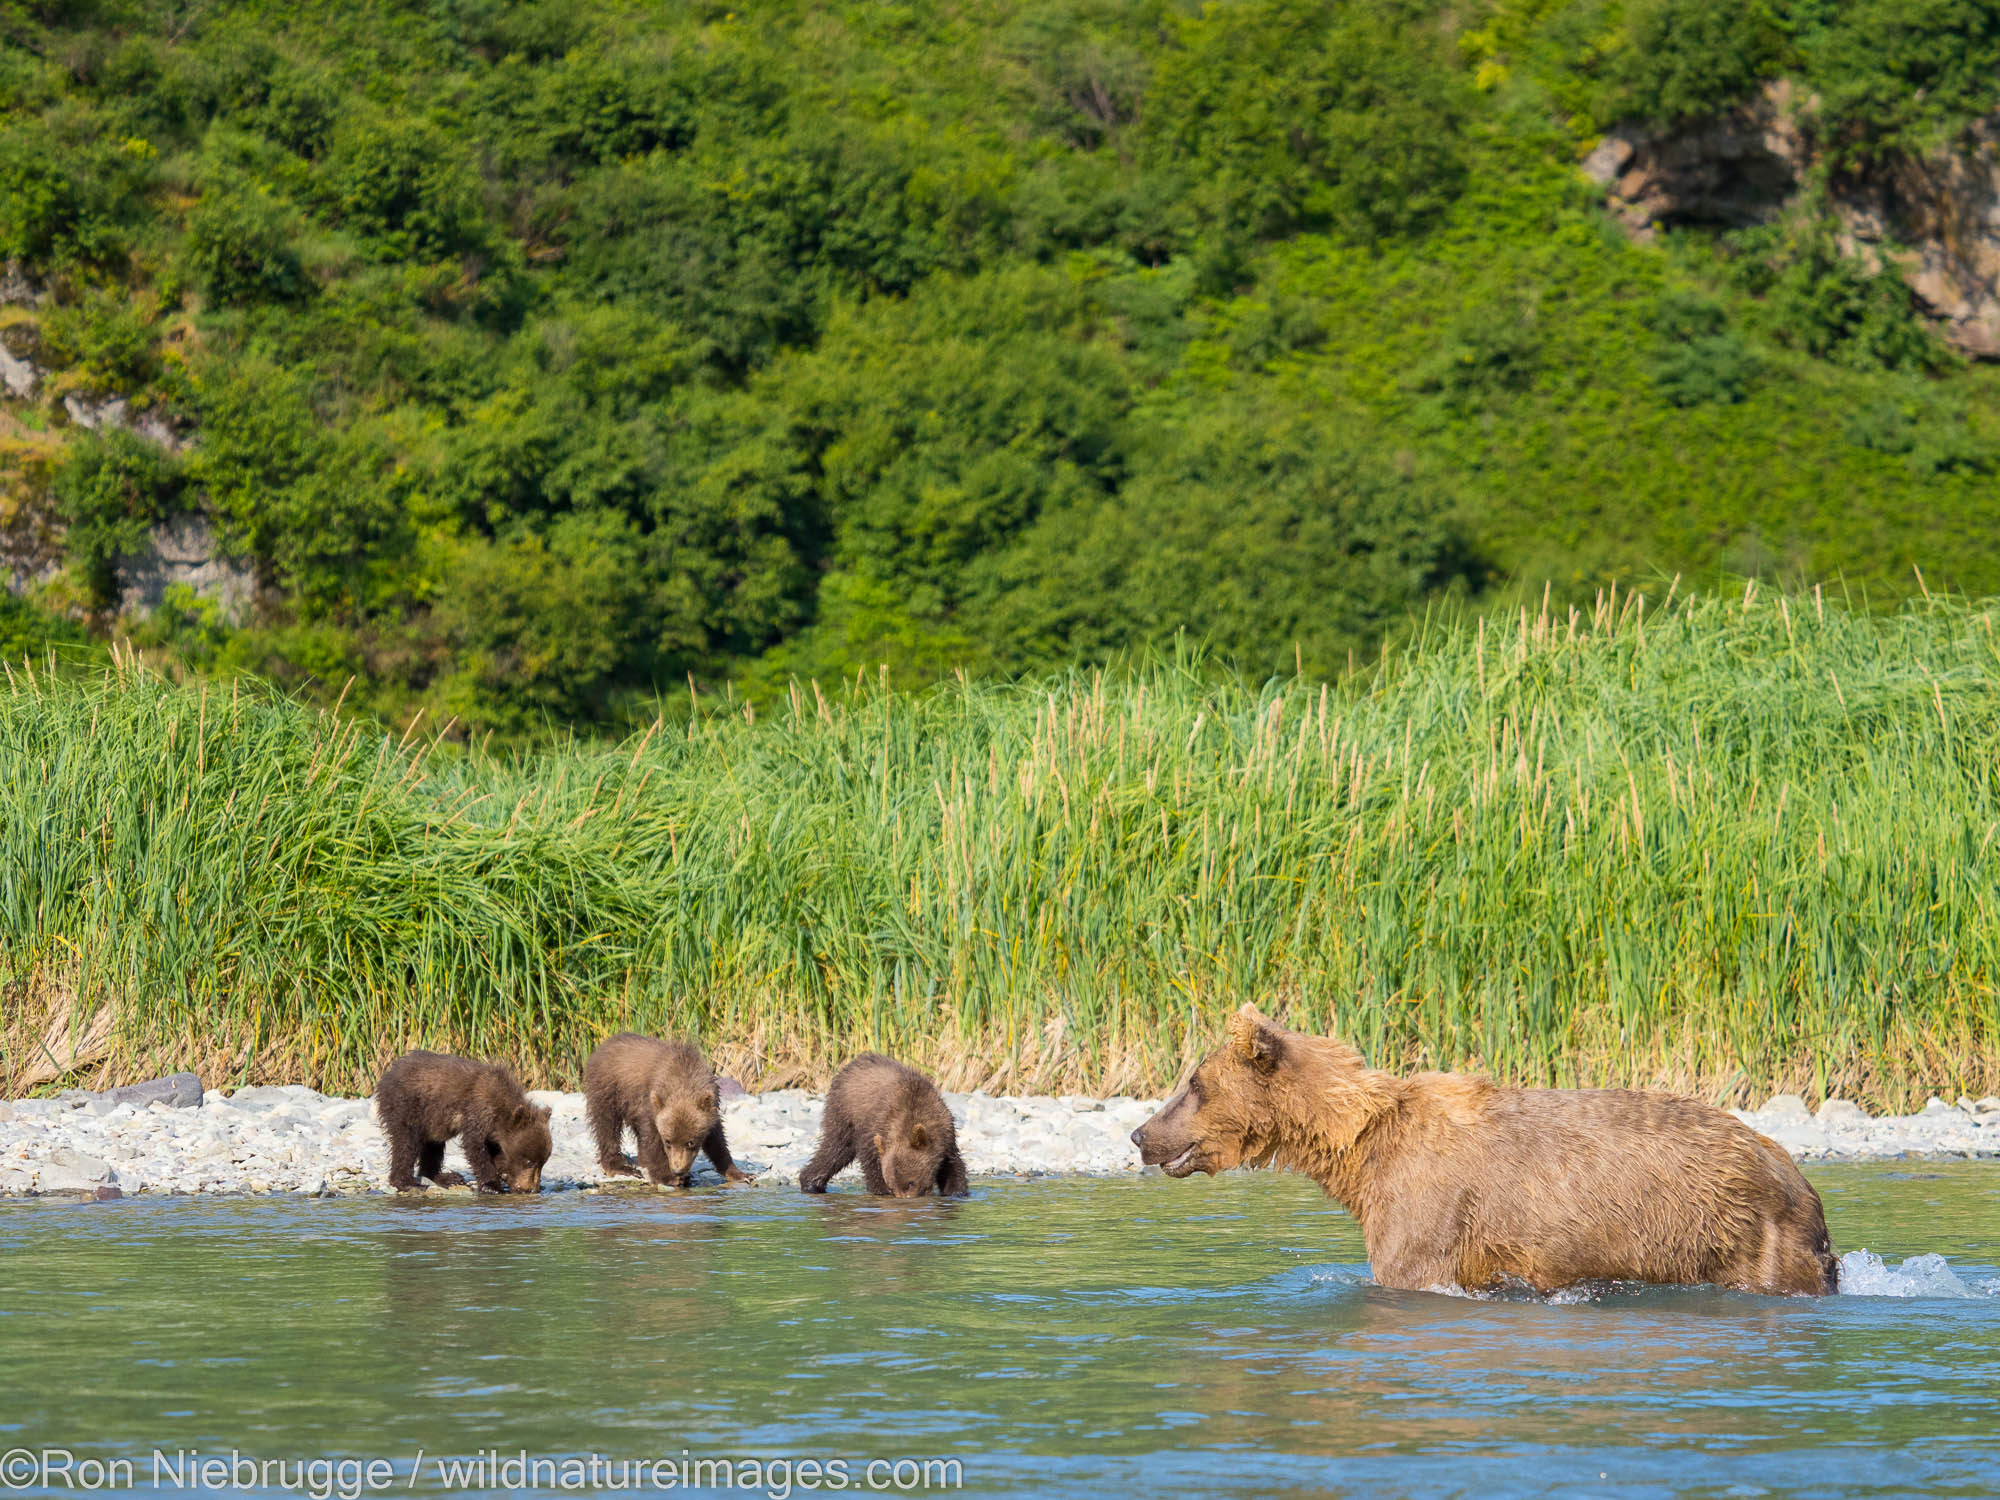 A Brown or Grizzly Bear, Geographic Harbor, Katmai National Park, Alaska.